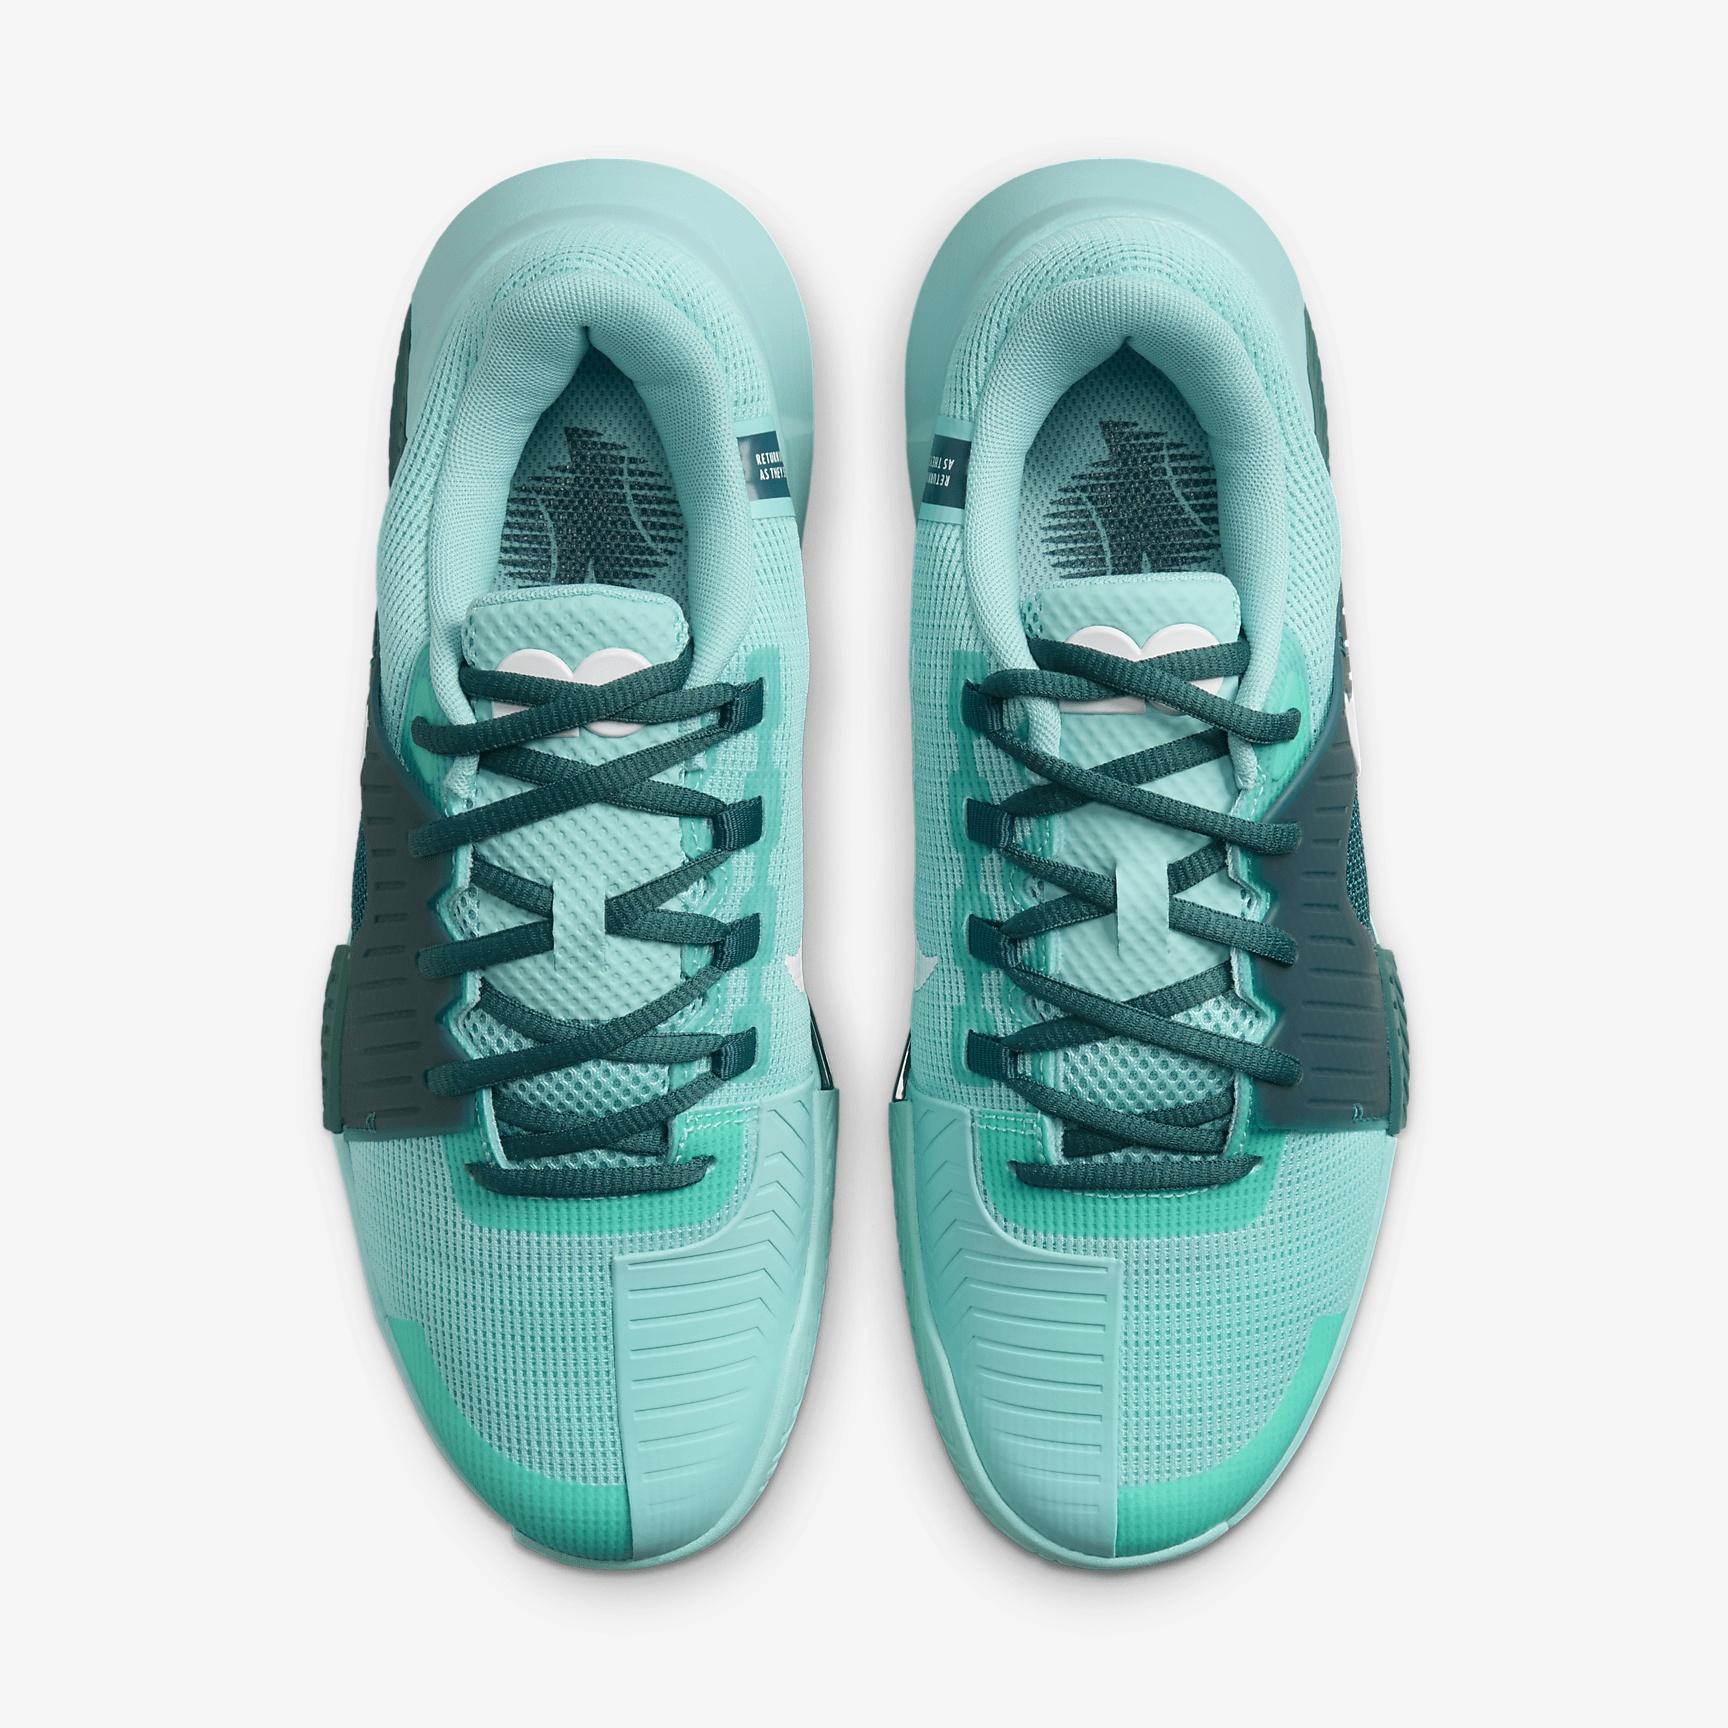 Nike GP Challenge 1 "Naomi Osaka" Premium Women's Hard Court Tennis Shoes - 4